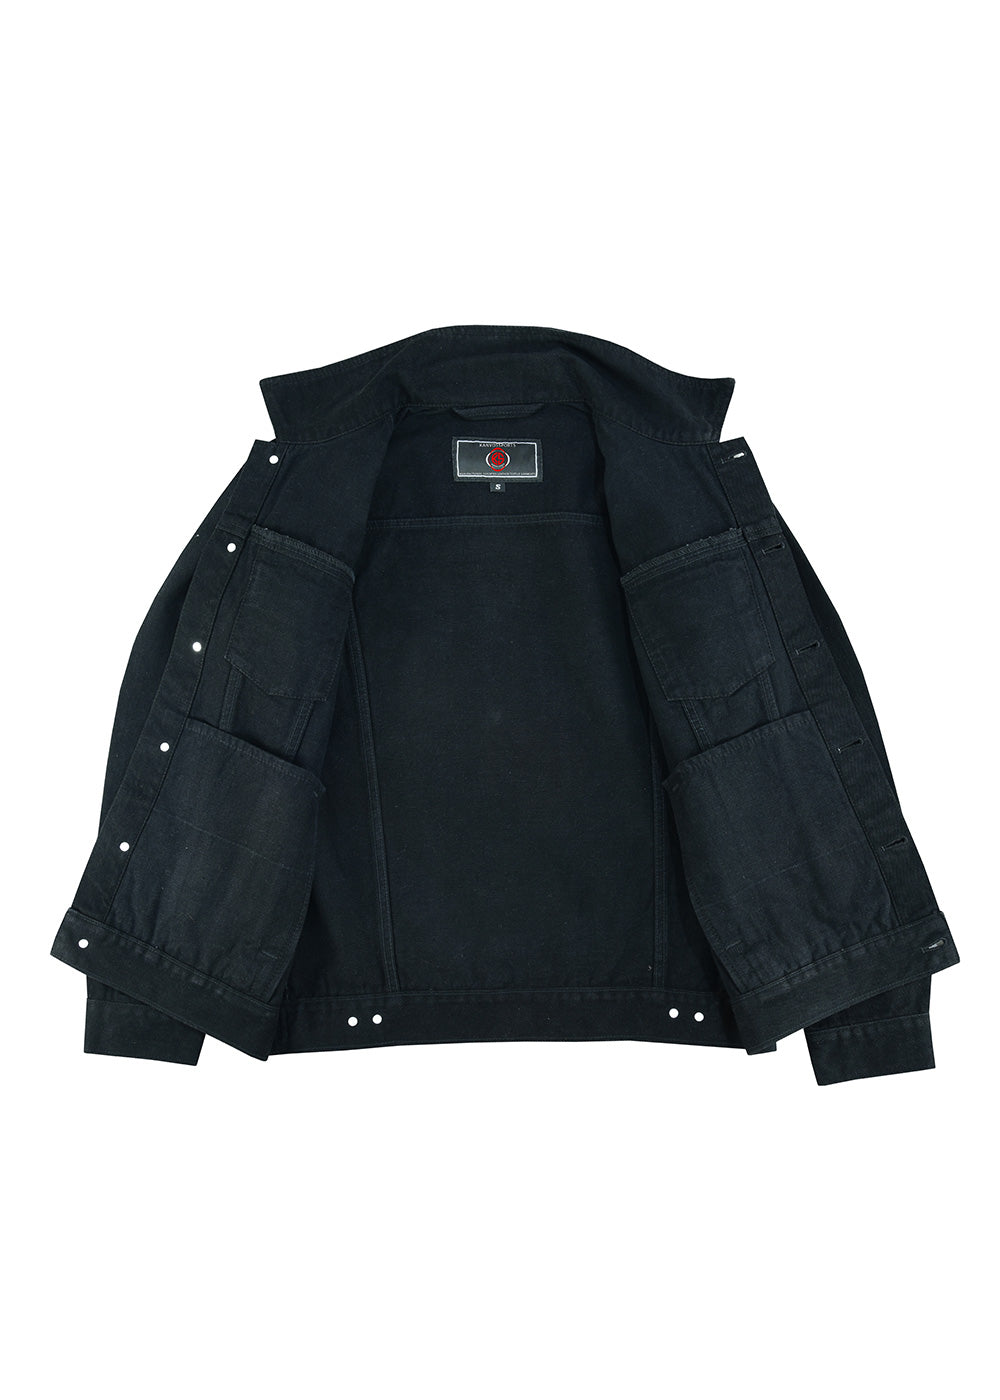 Men's Denim Leather Vest-15